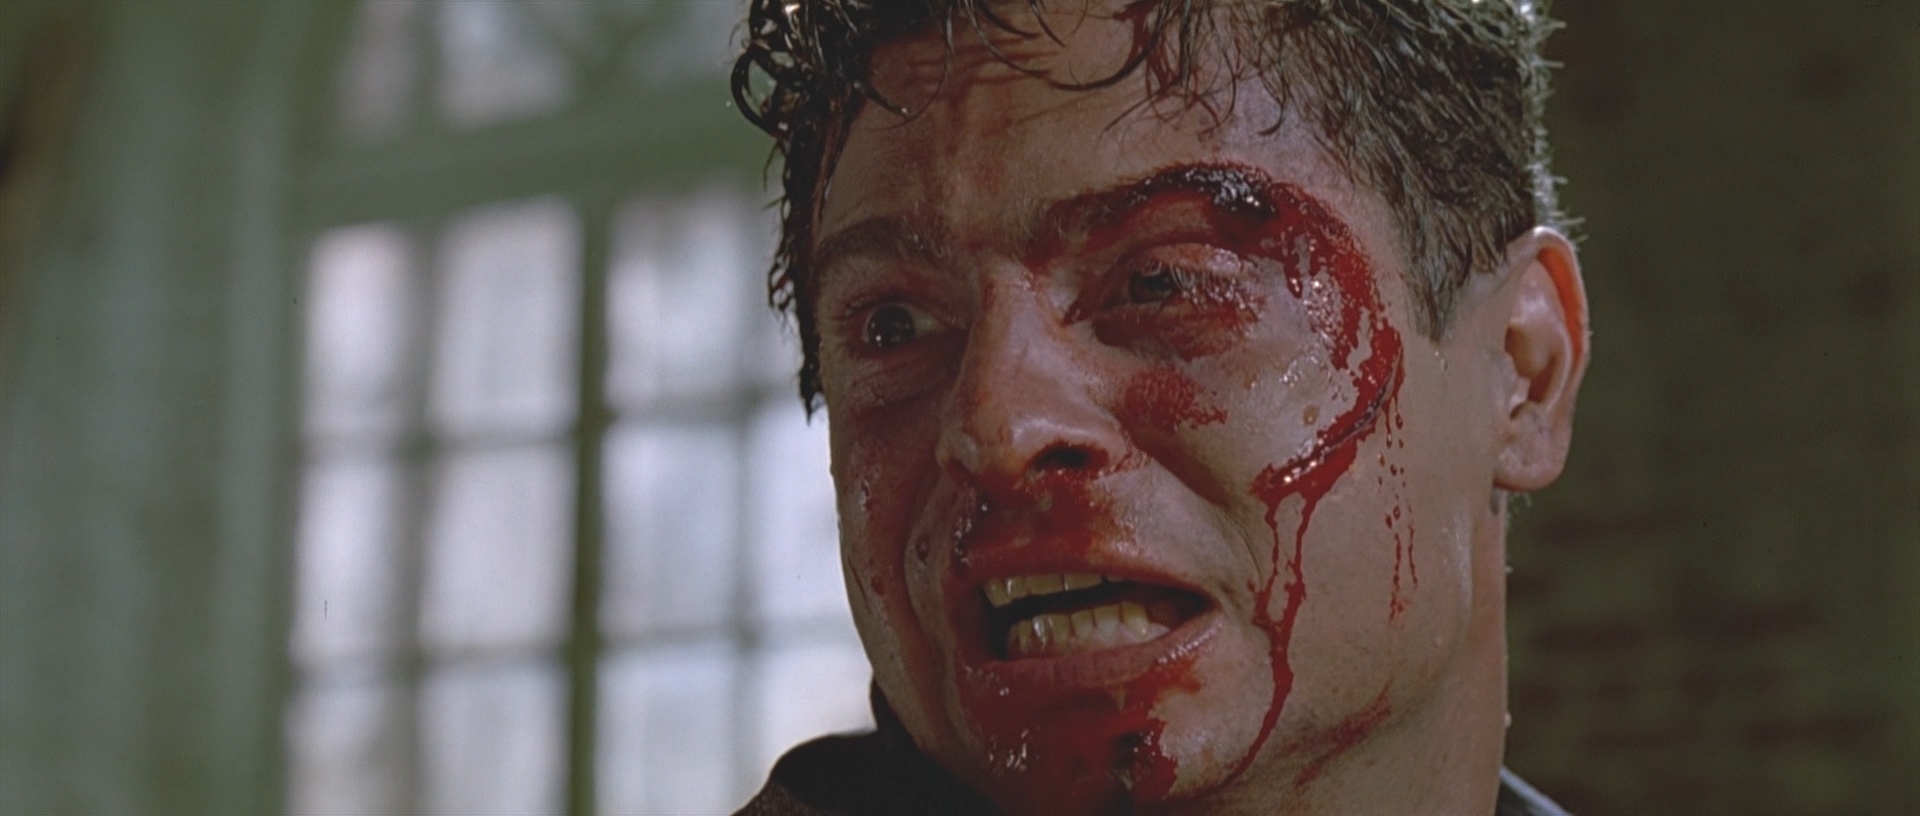 Kirk Baltz in Reservoir Dogs (1992)